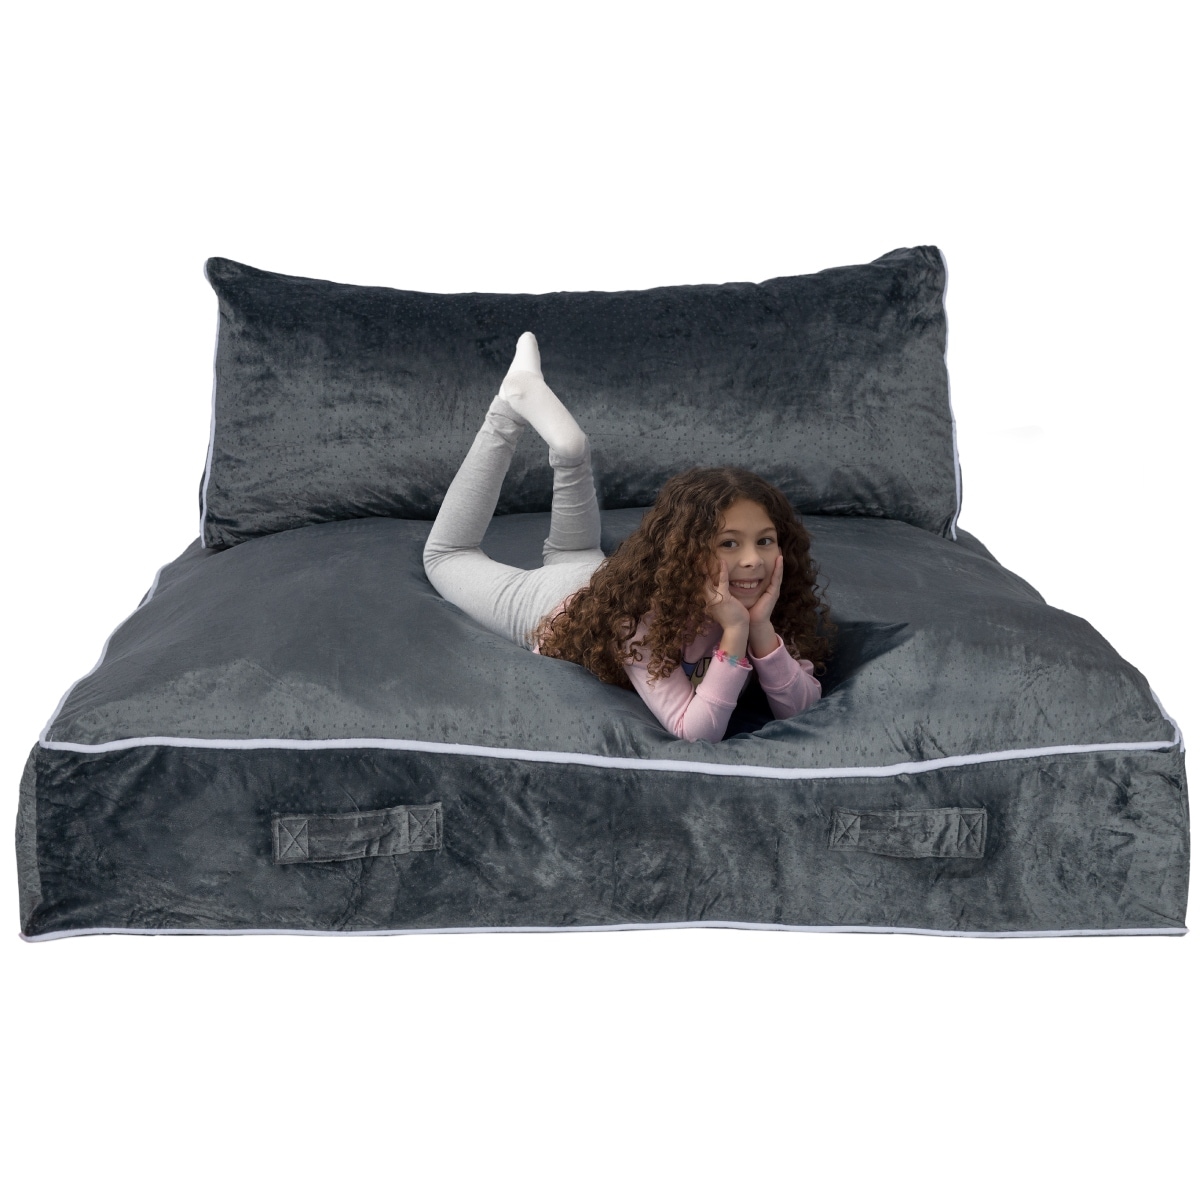  Milliard Pillow Inserts Shredded Memory Foam Cushion